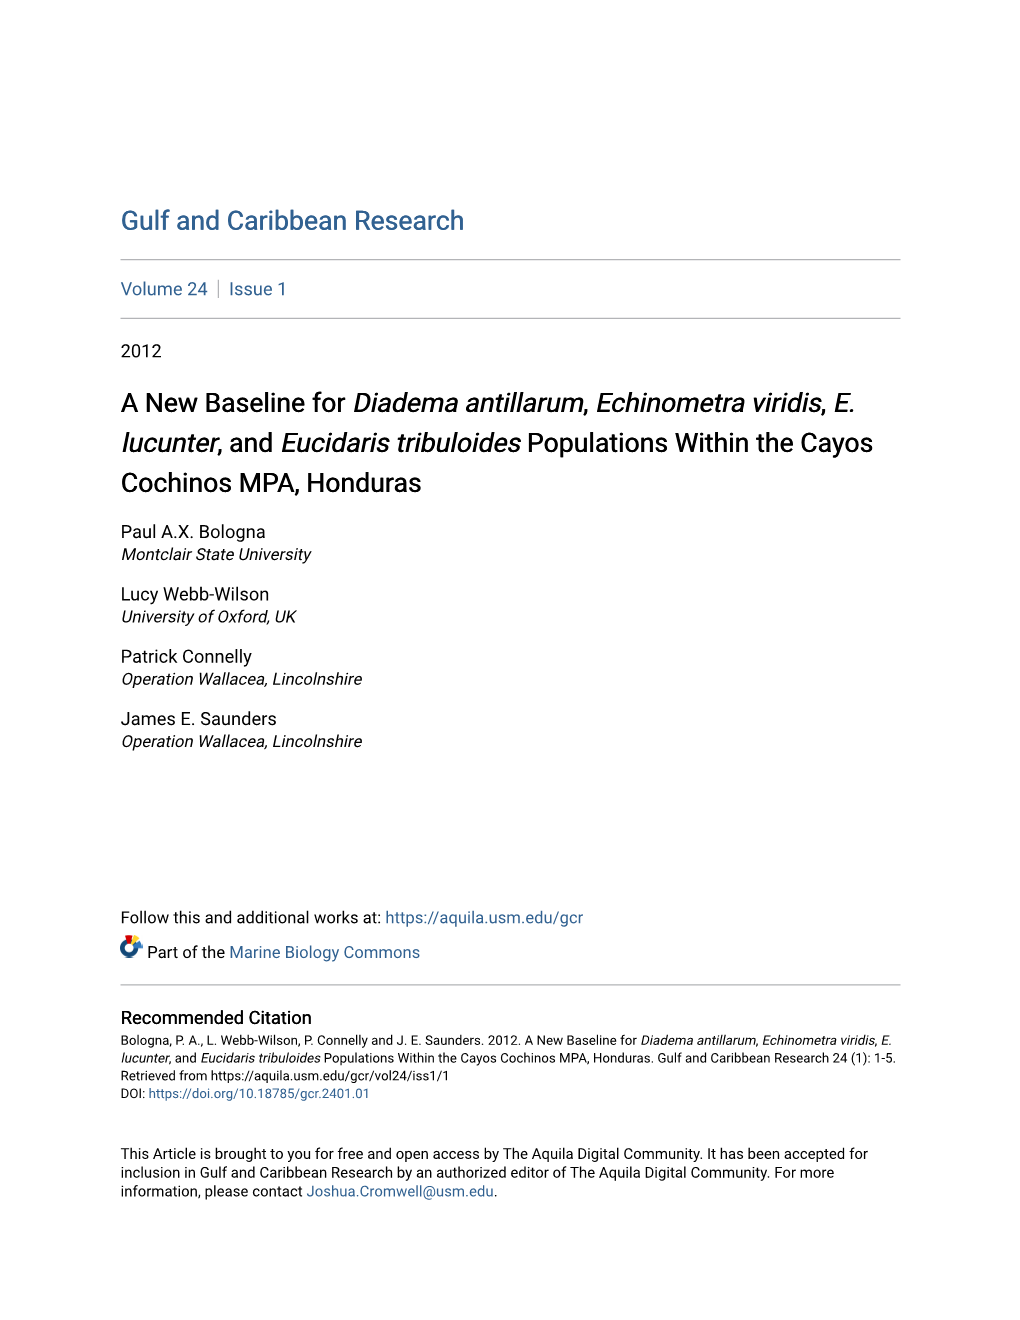 A New Baseline for Diadema Antillarum, Echinometra Viridis, E